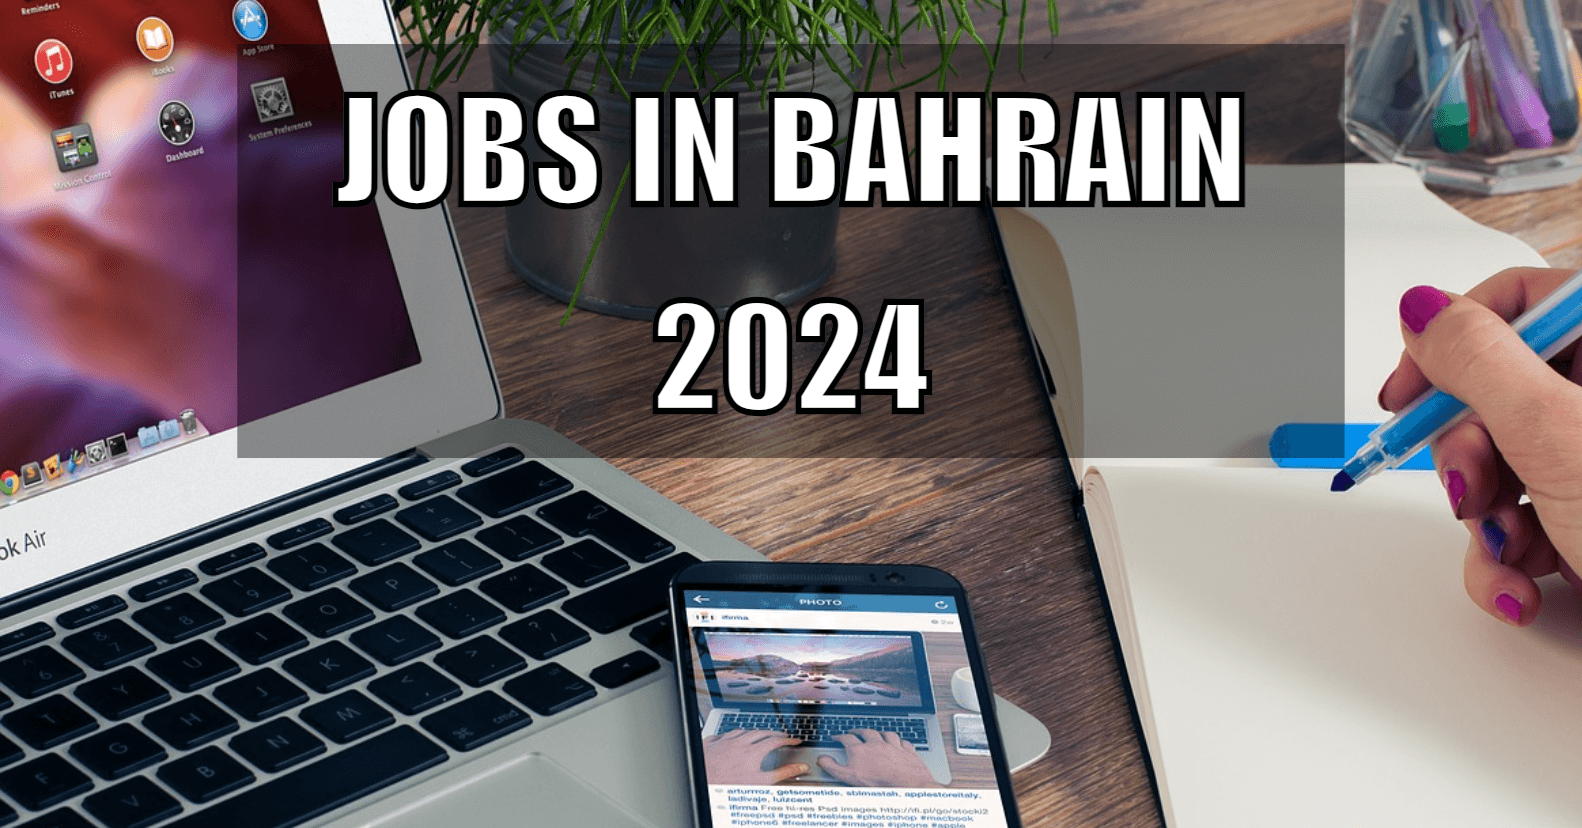 Jobs in Bahrain 2024